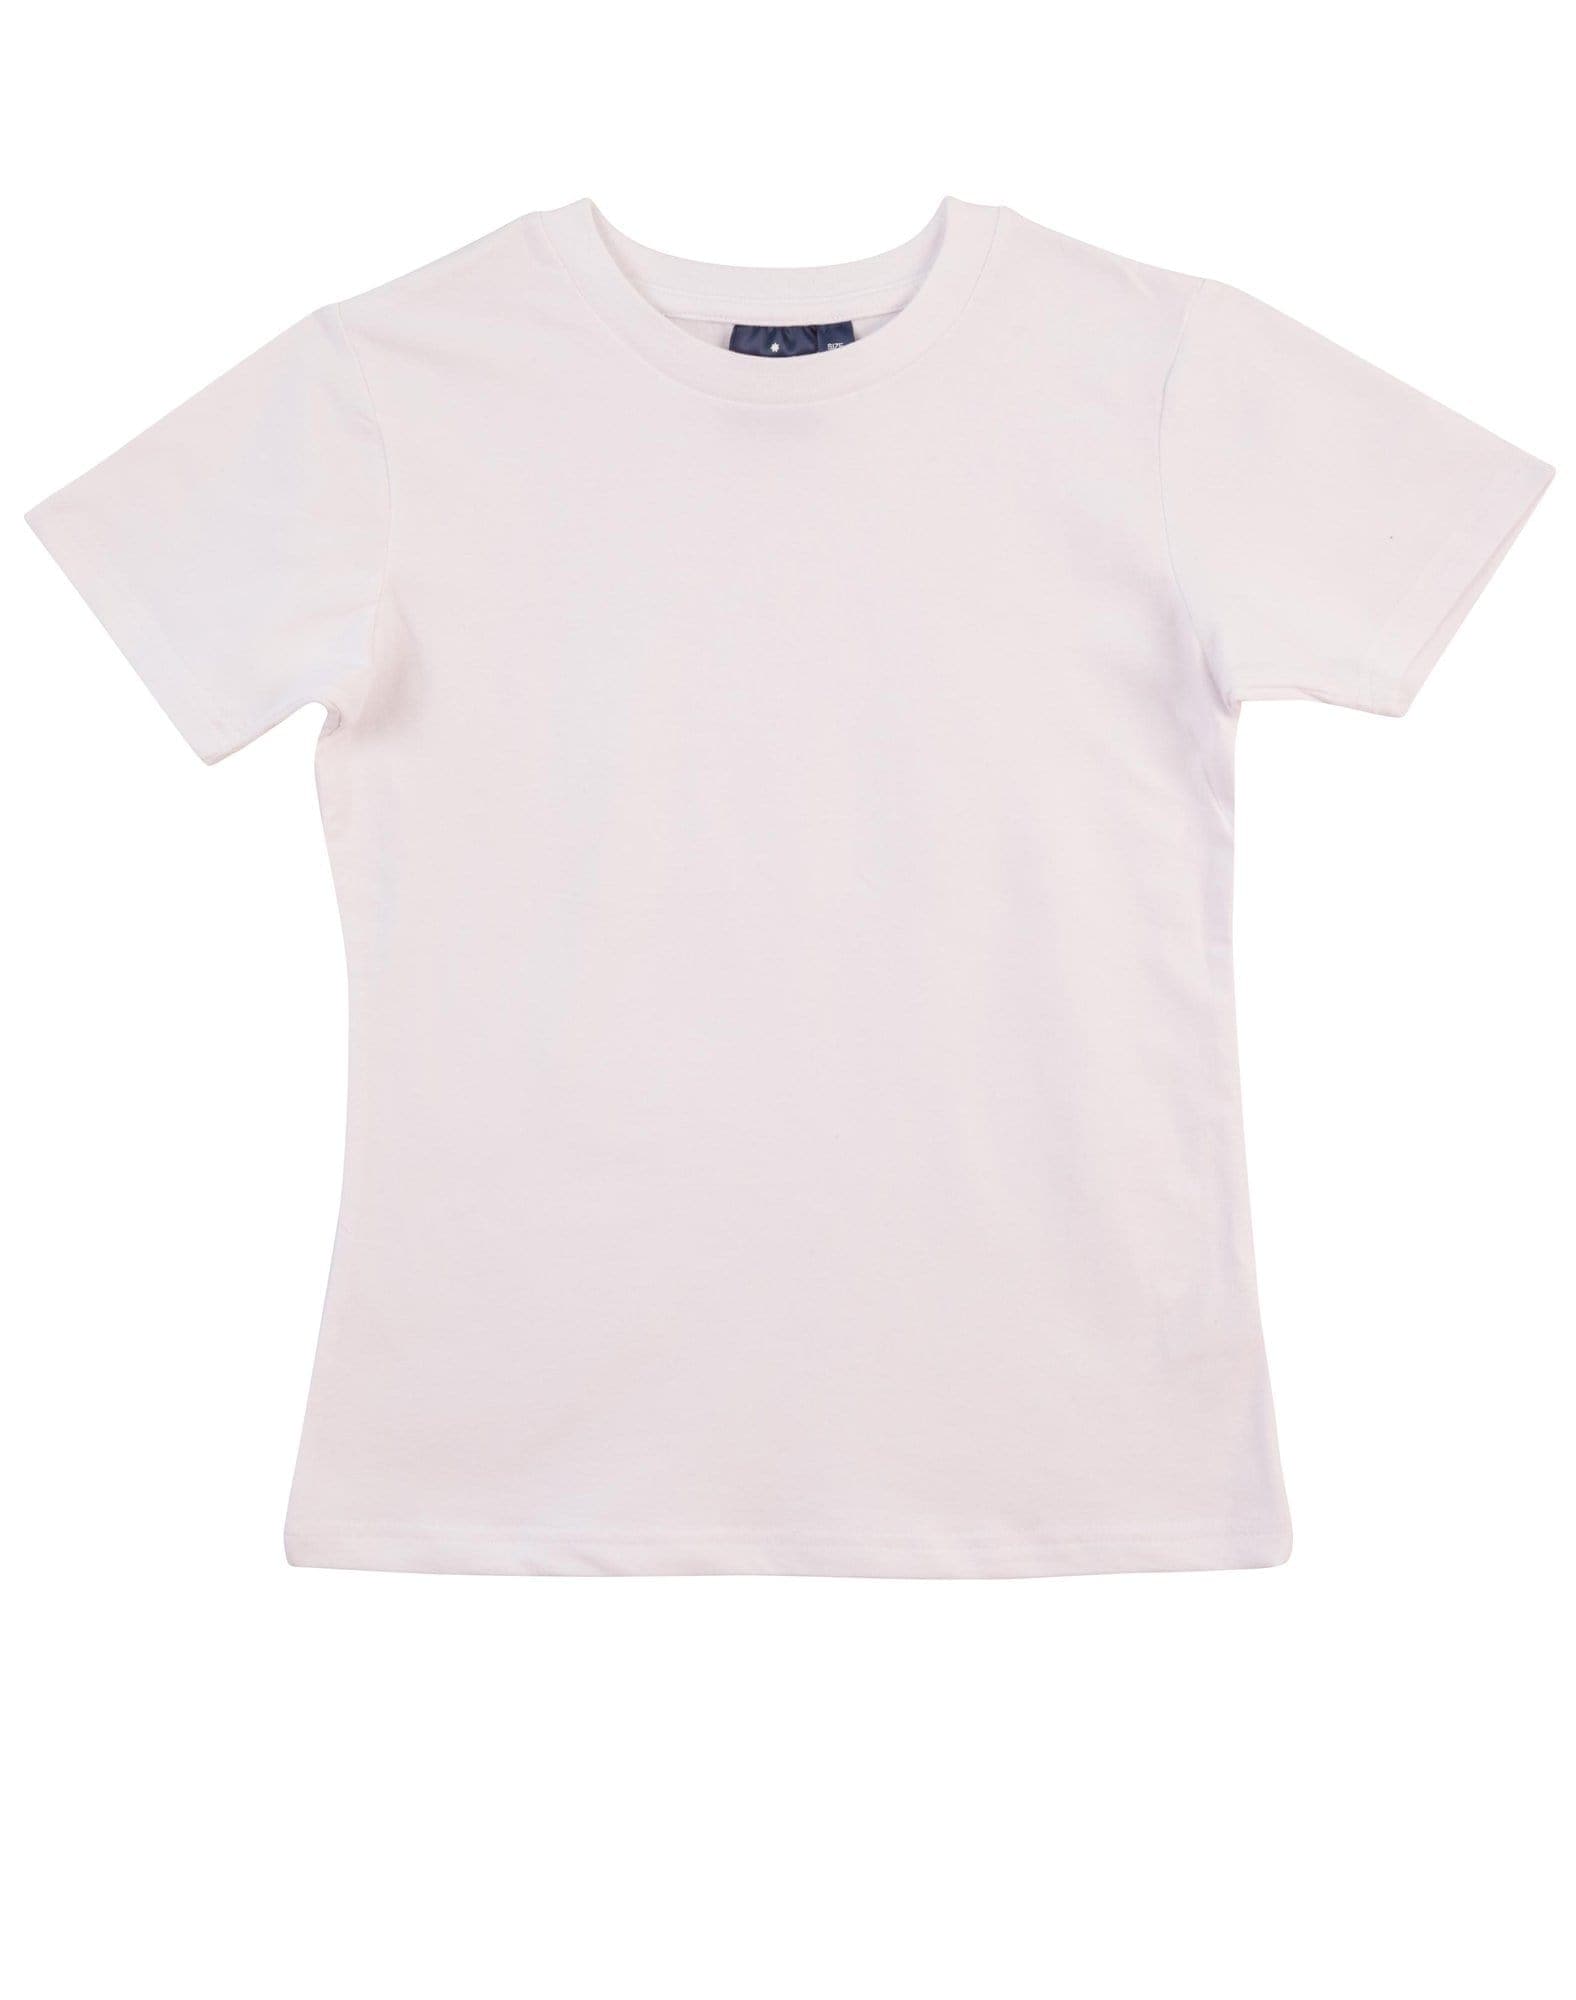 Superfit Tee Shirt Ladies' Ts15 Casual Wear Winning Spirit White 8 